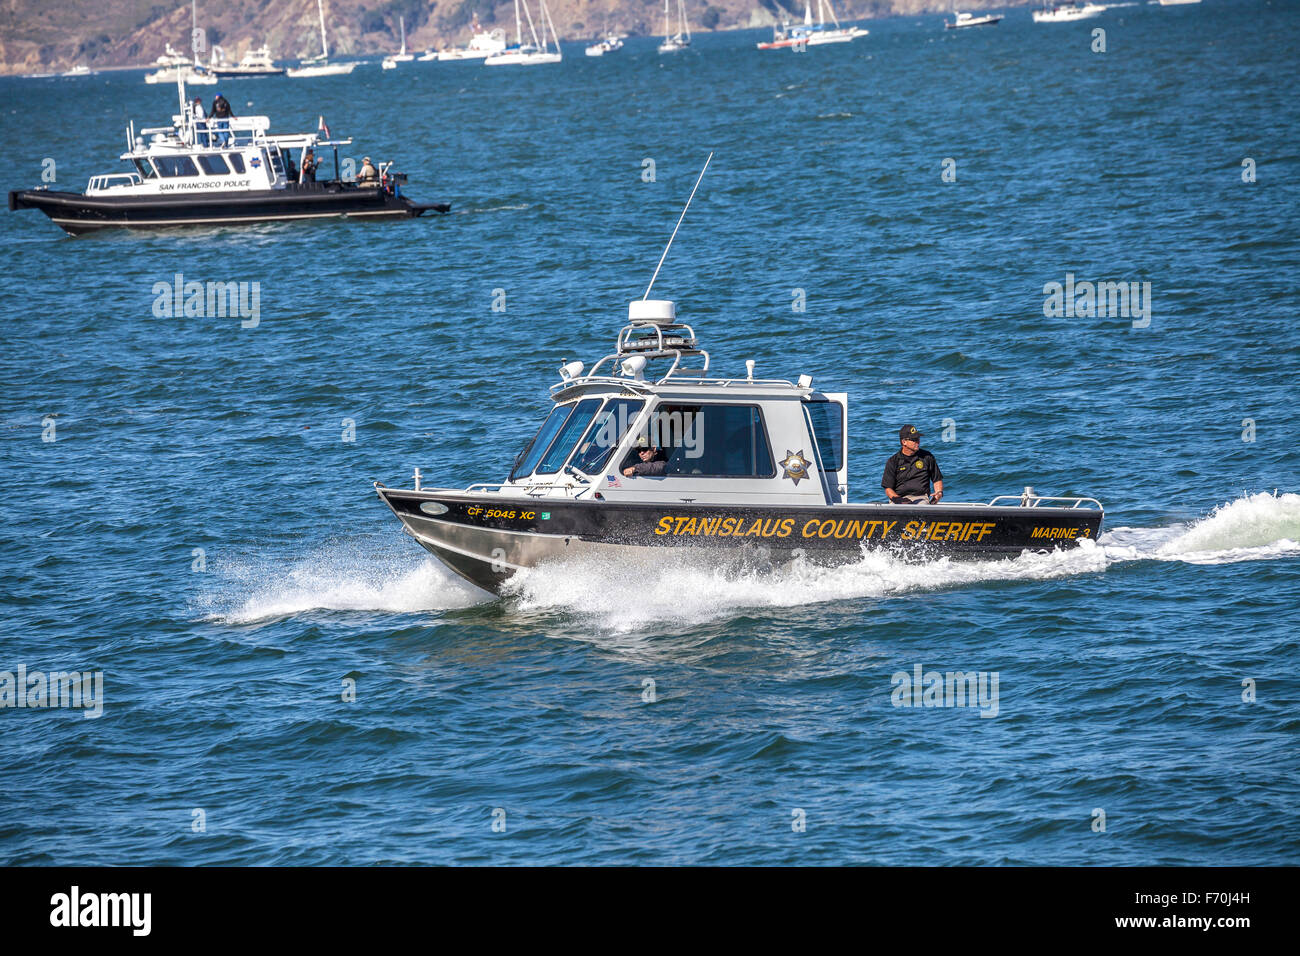 Stanislaus County Sheriff's rescue boat patrolling the San Francisco Bay during fleet week, San Francisco, California, USA Stock Photo